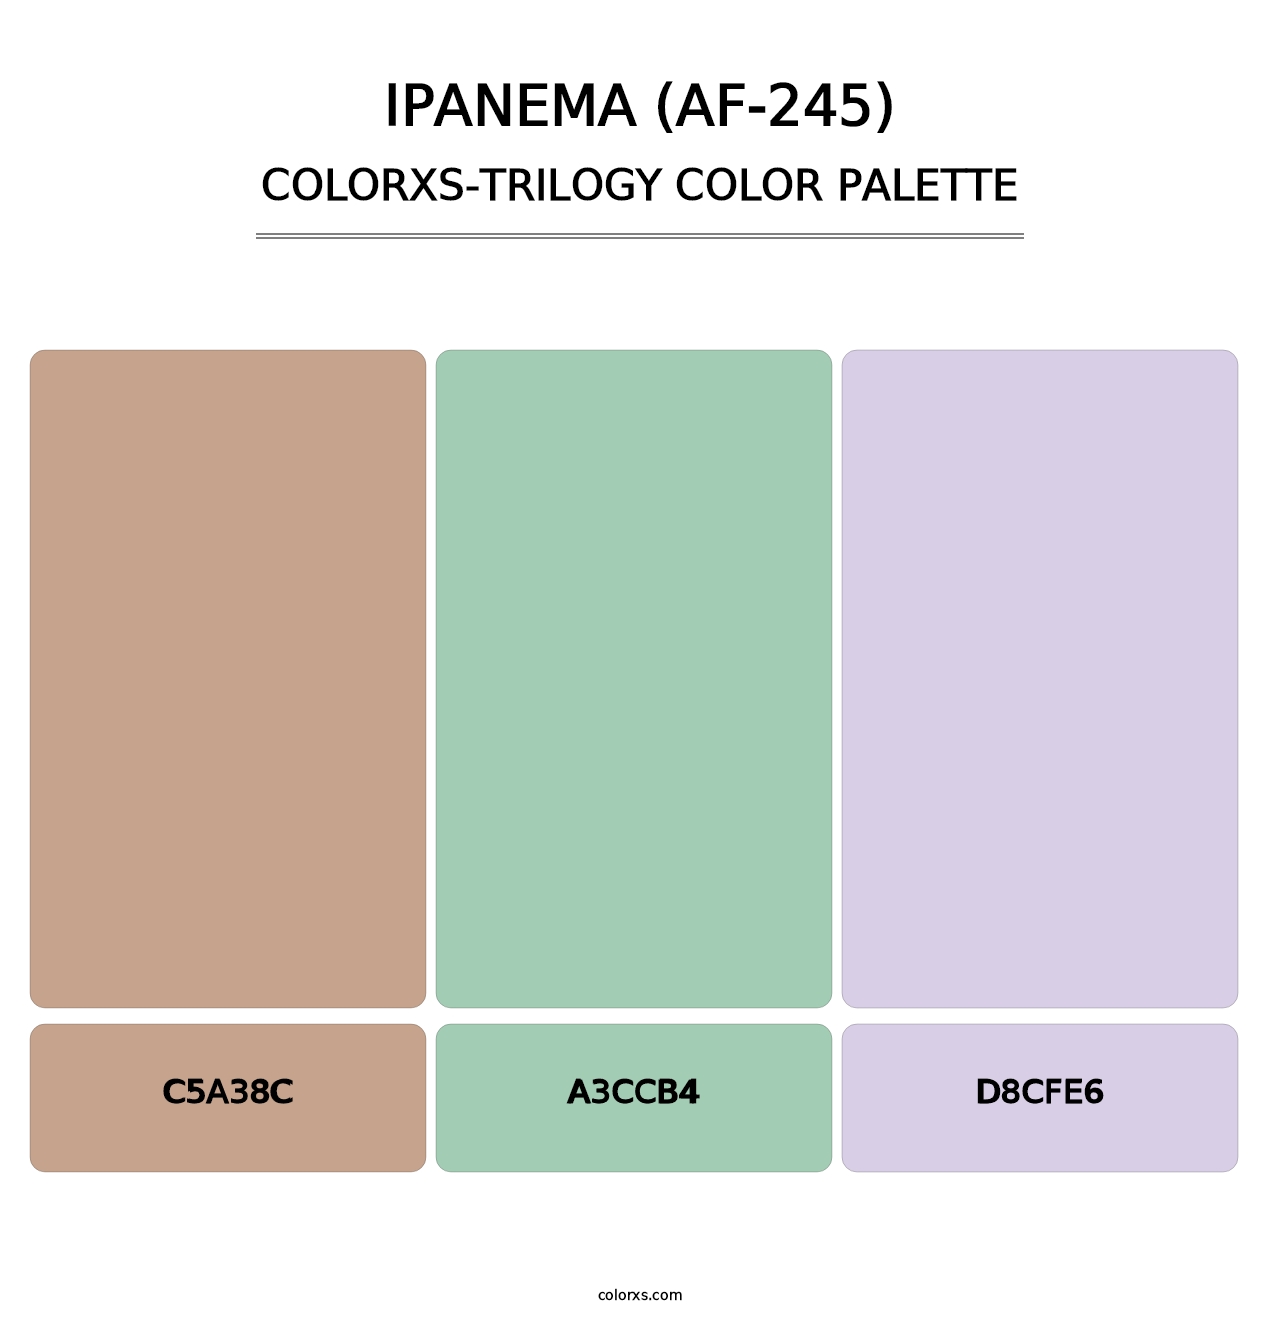 Ipanema (AF-245) - Colorxs Trilogy Palette